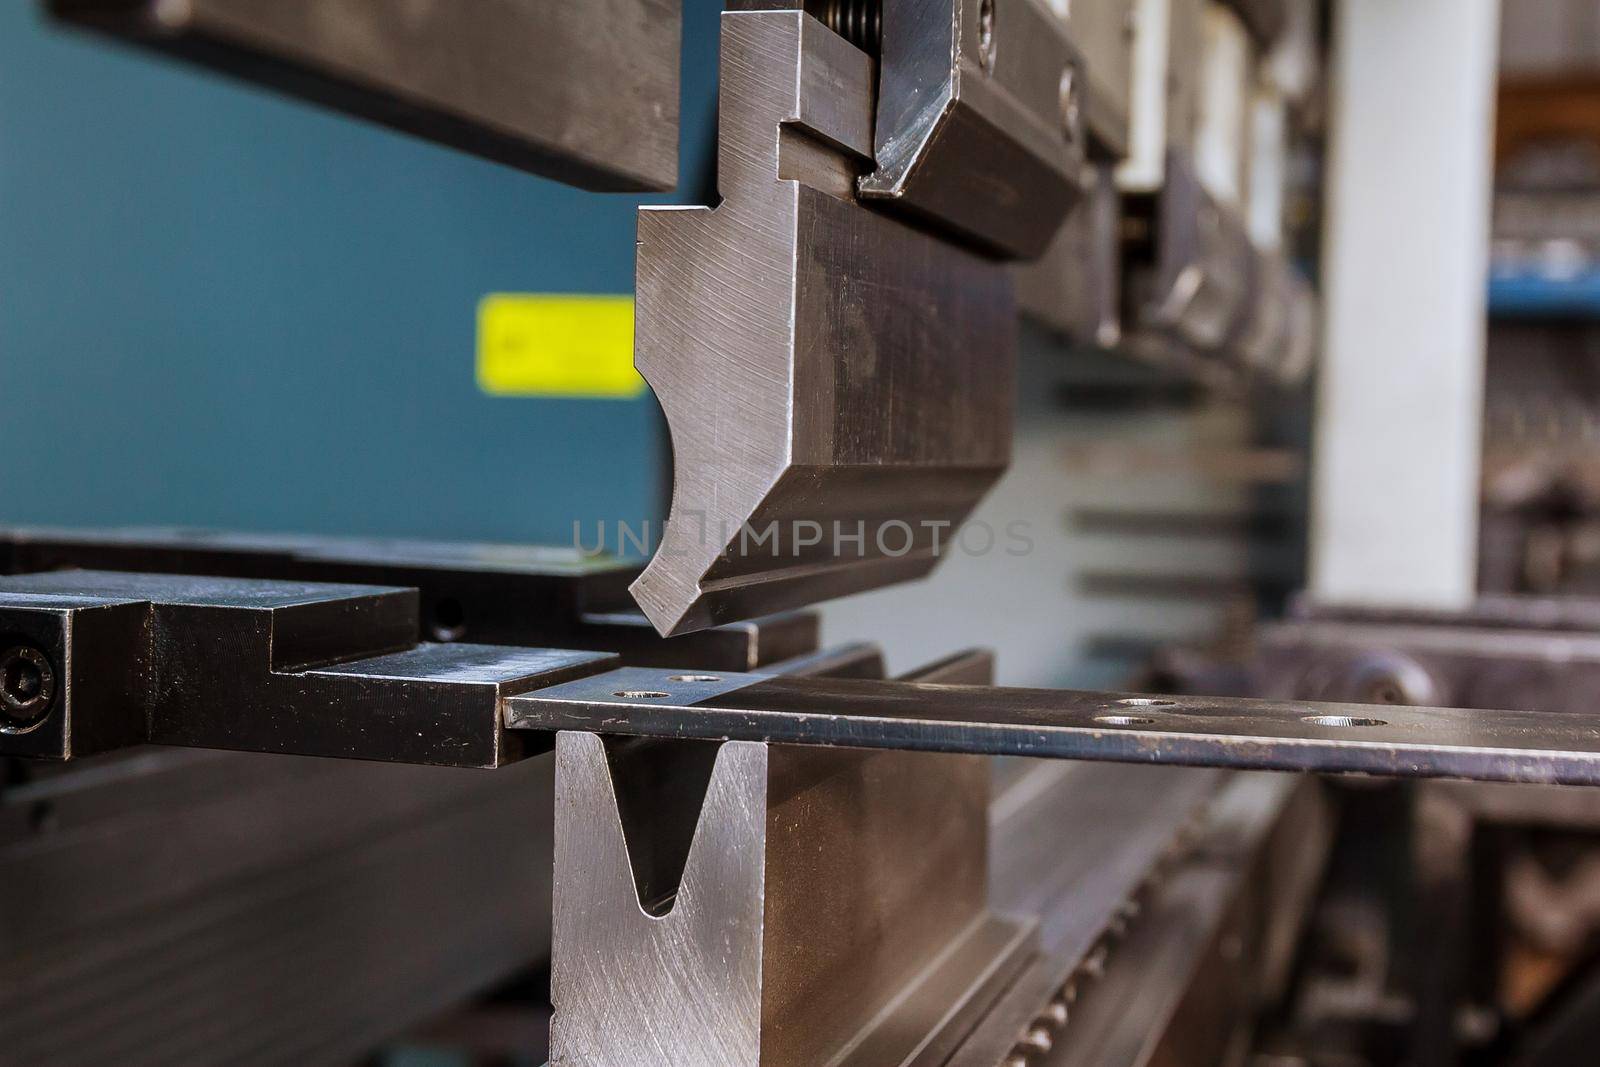 Modern hydraulic metal bending machine in a metallurgical factory